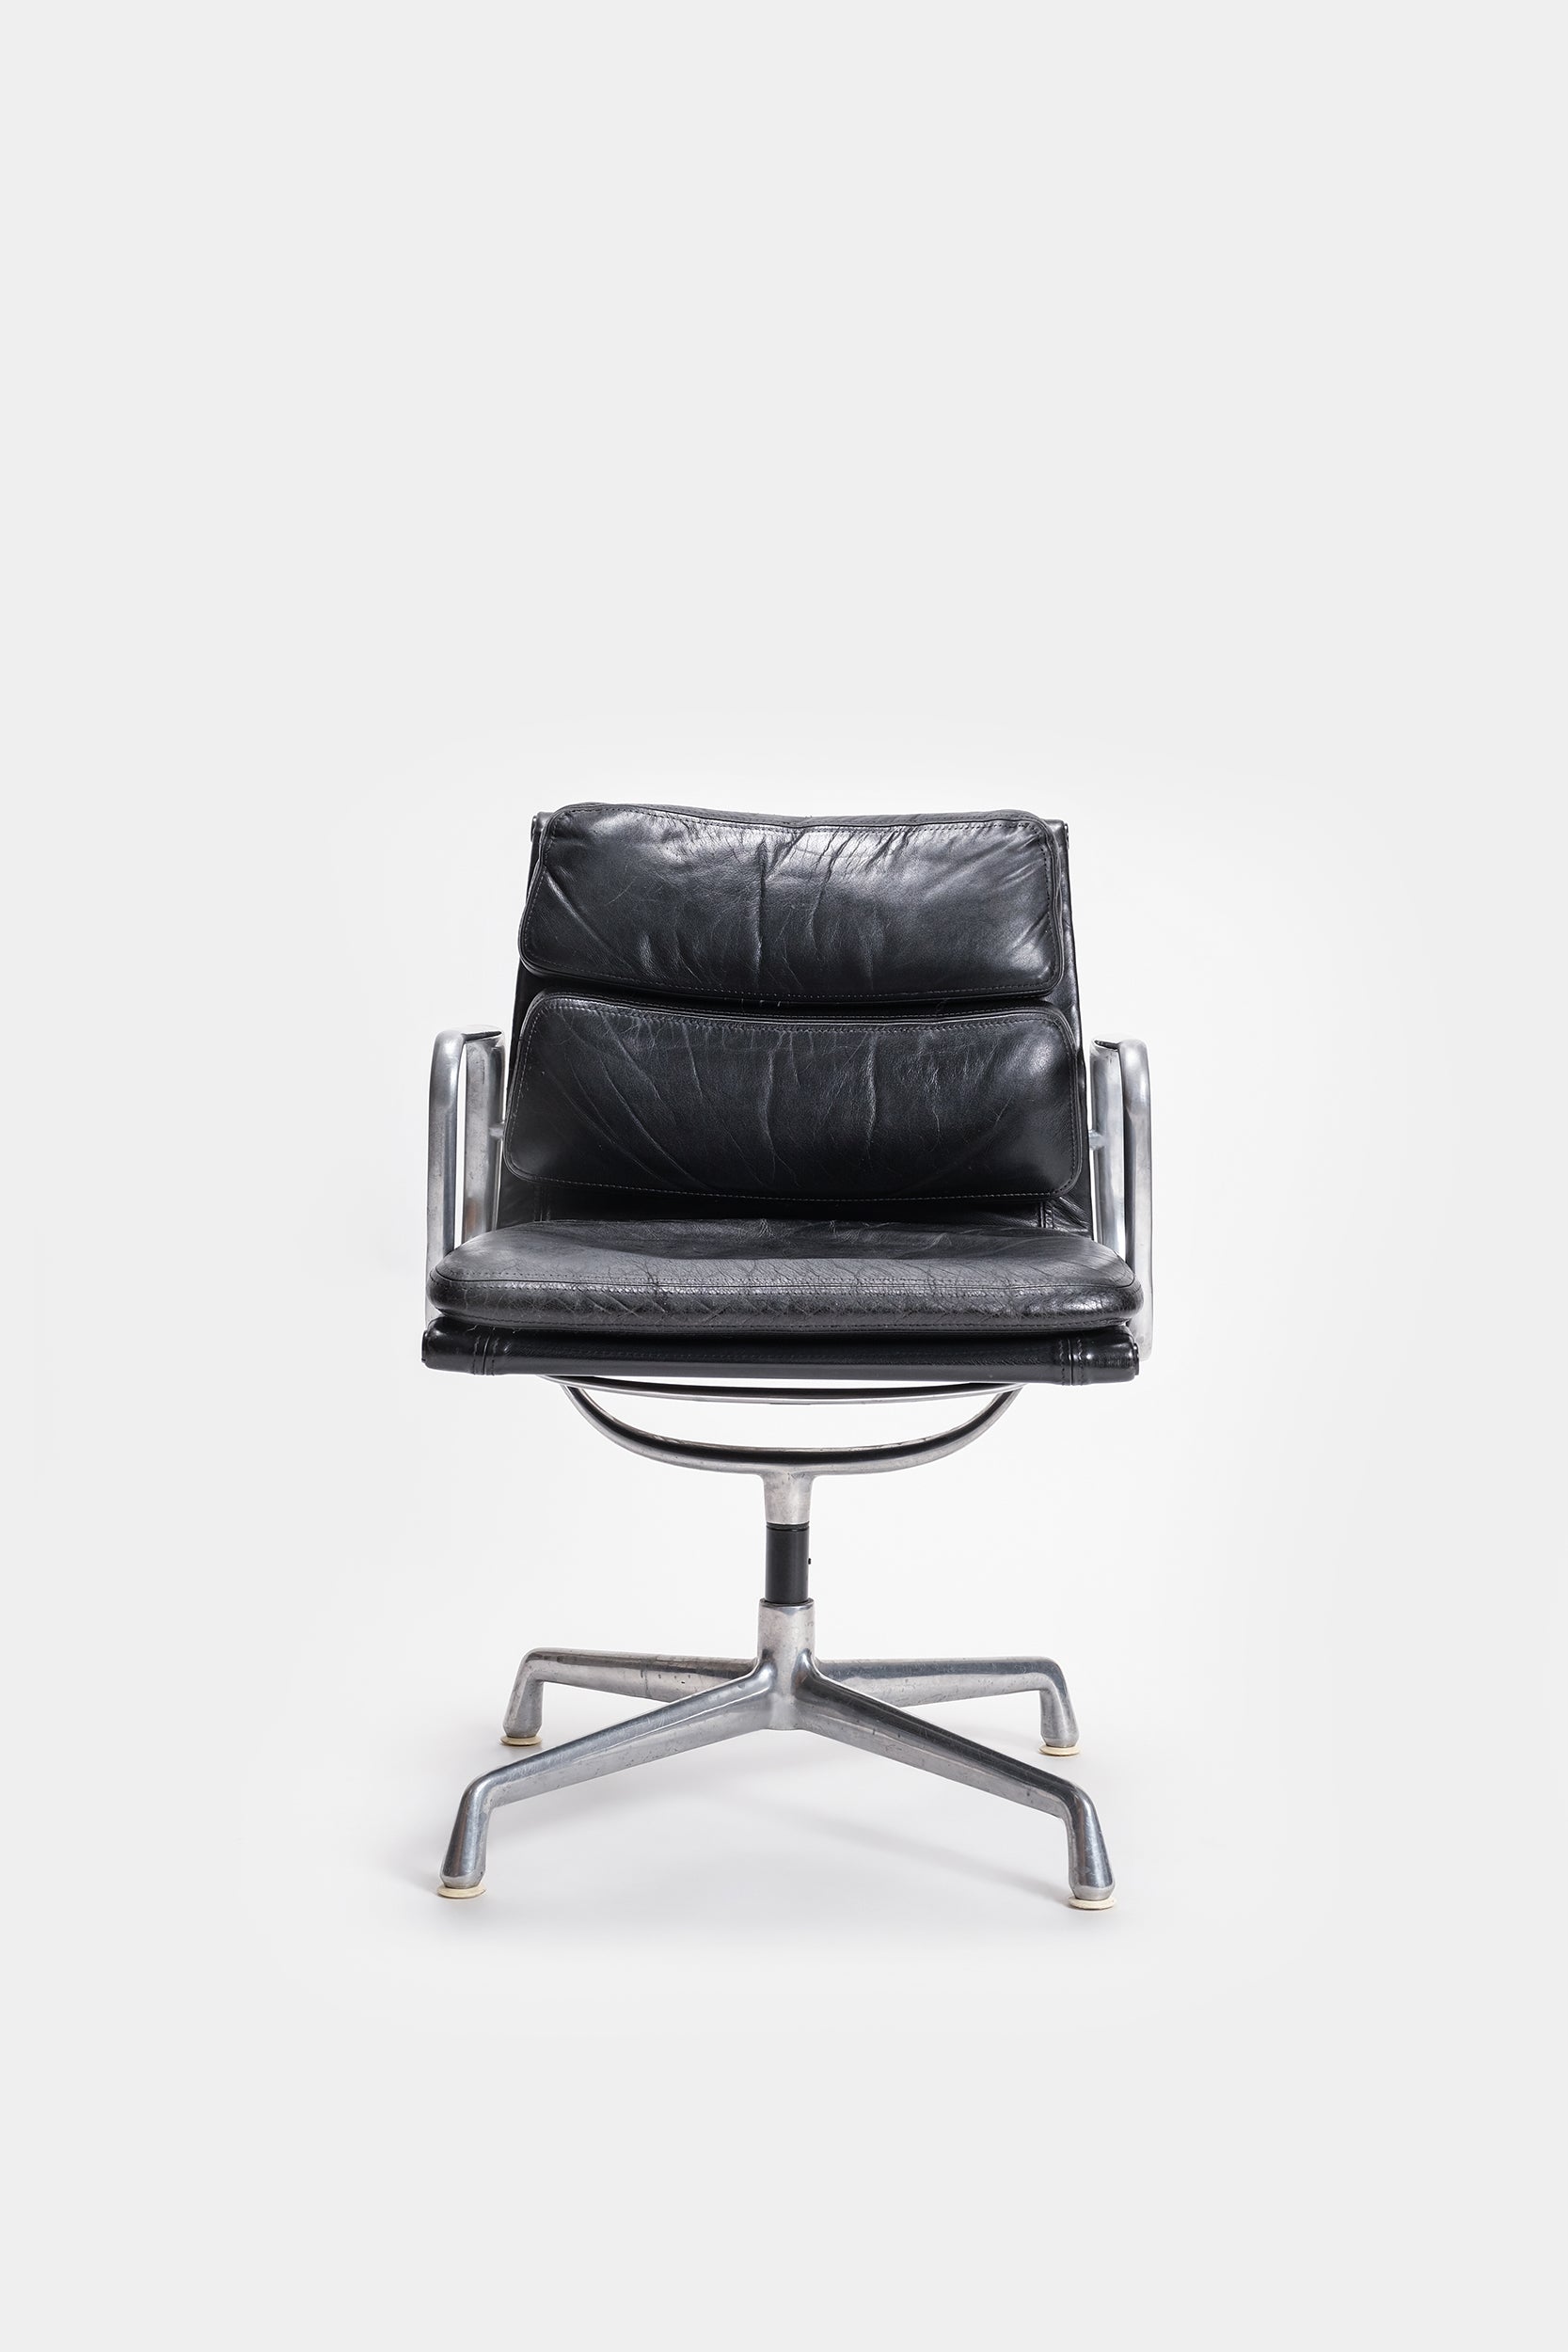 Charles Eames, EA208 Soft Pad Swivel Chair